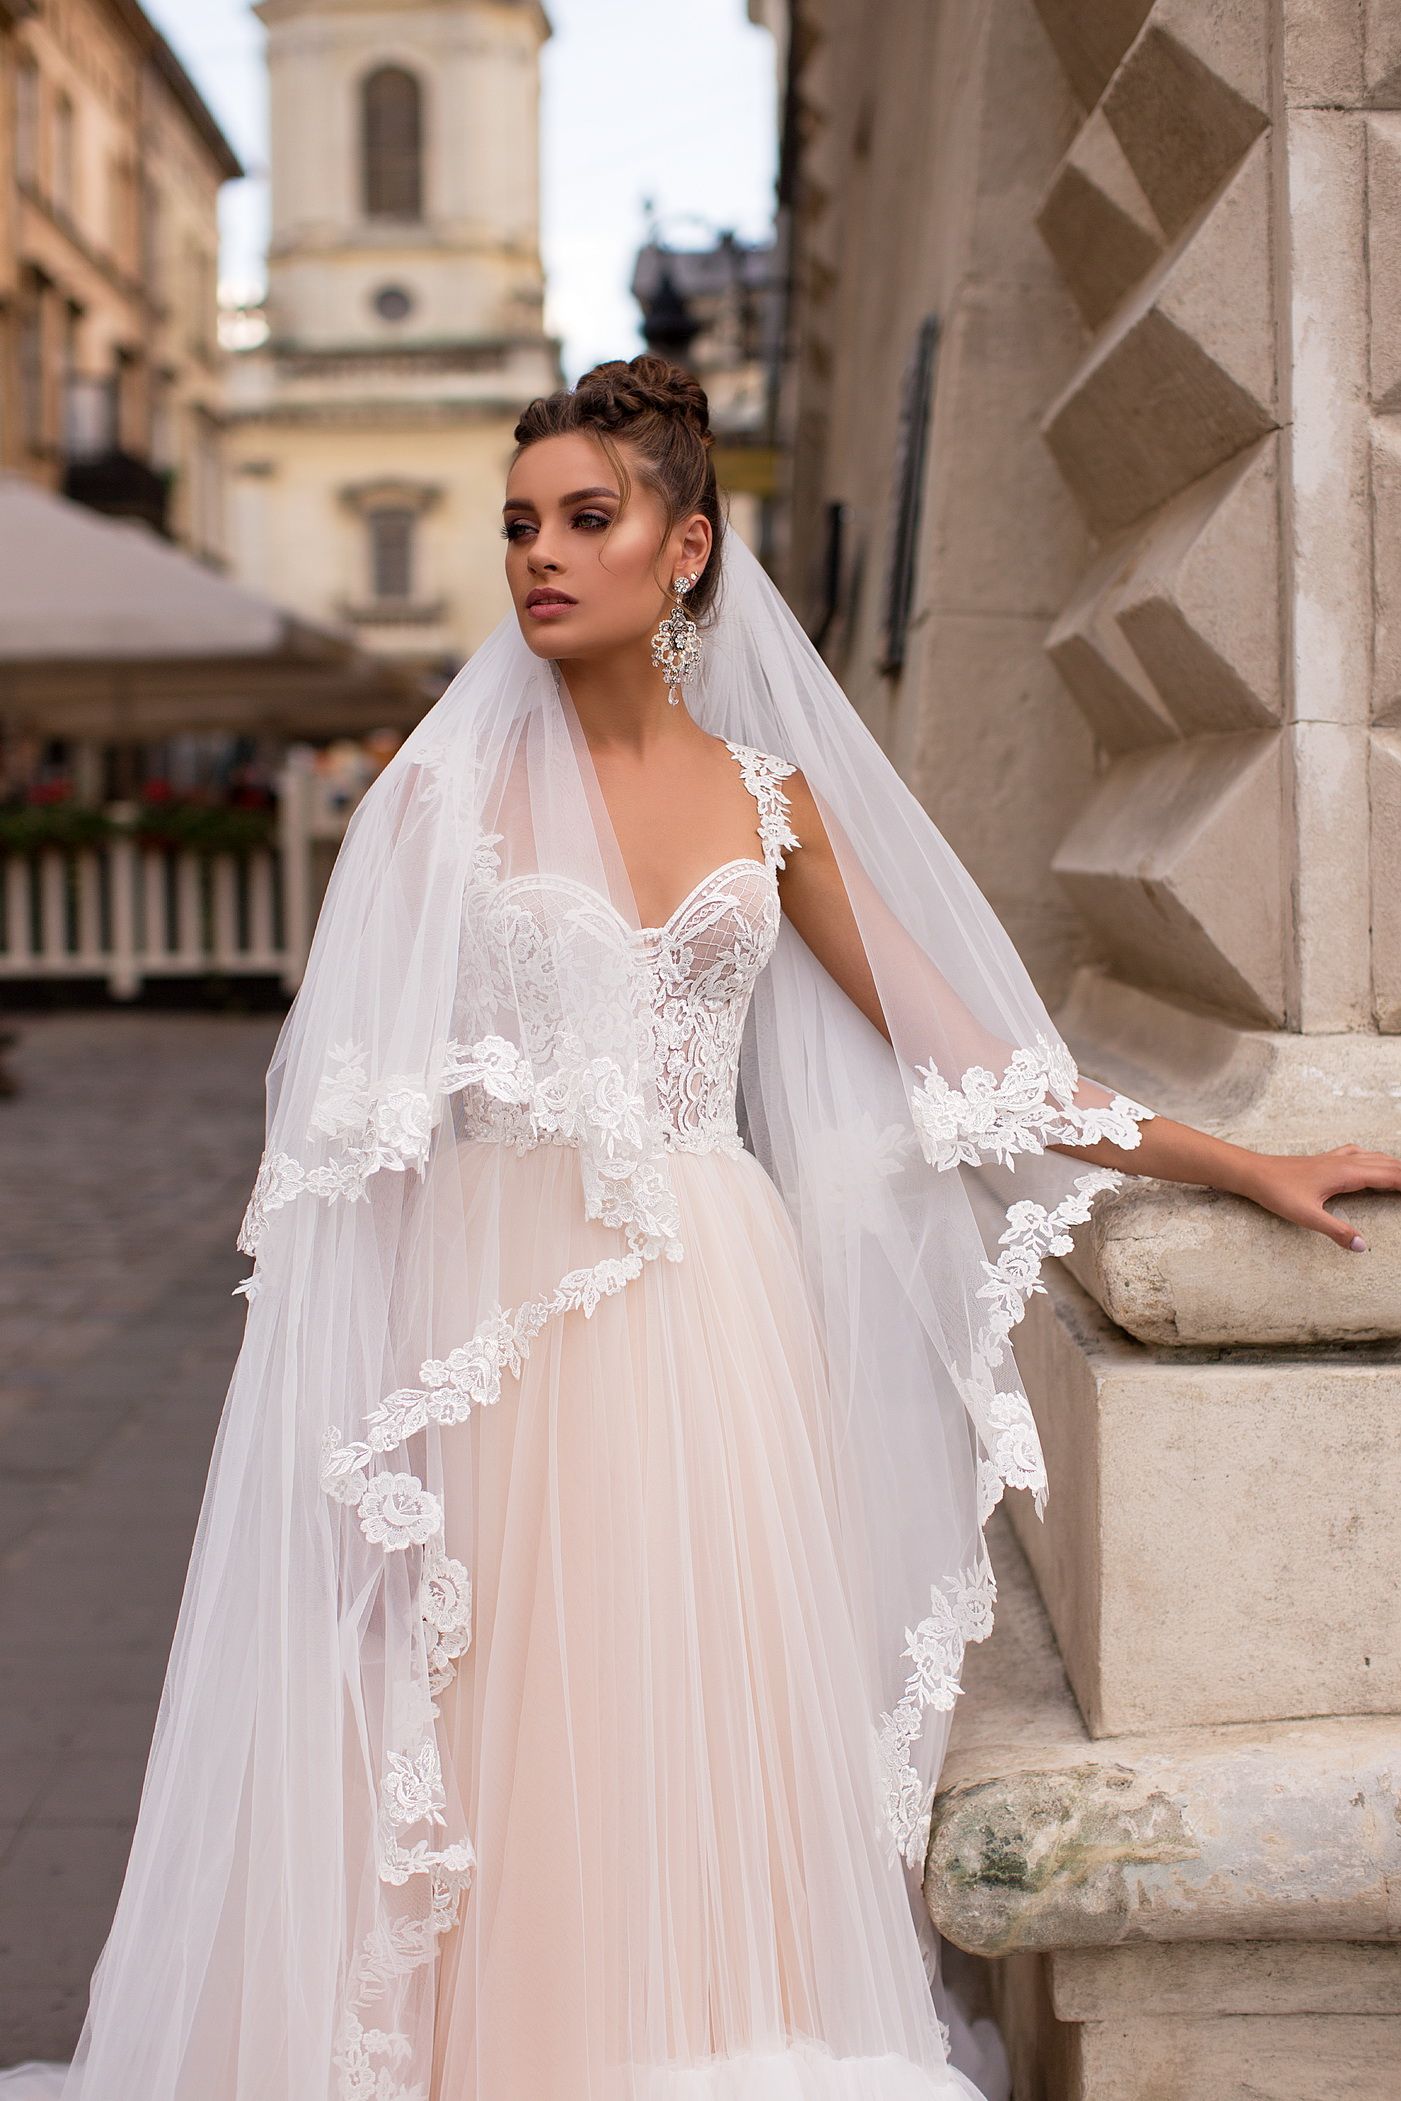 Liretta comum свадебное платье